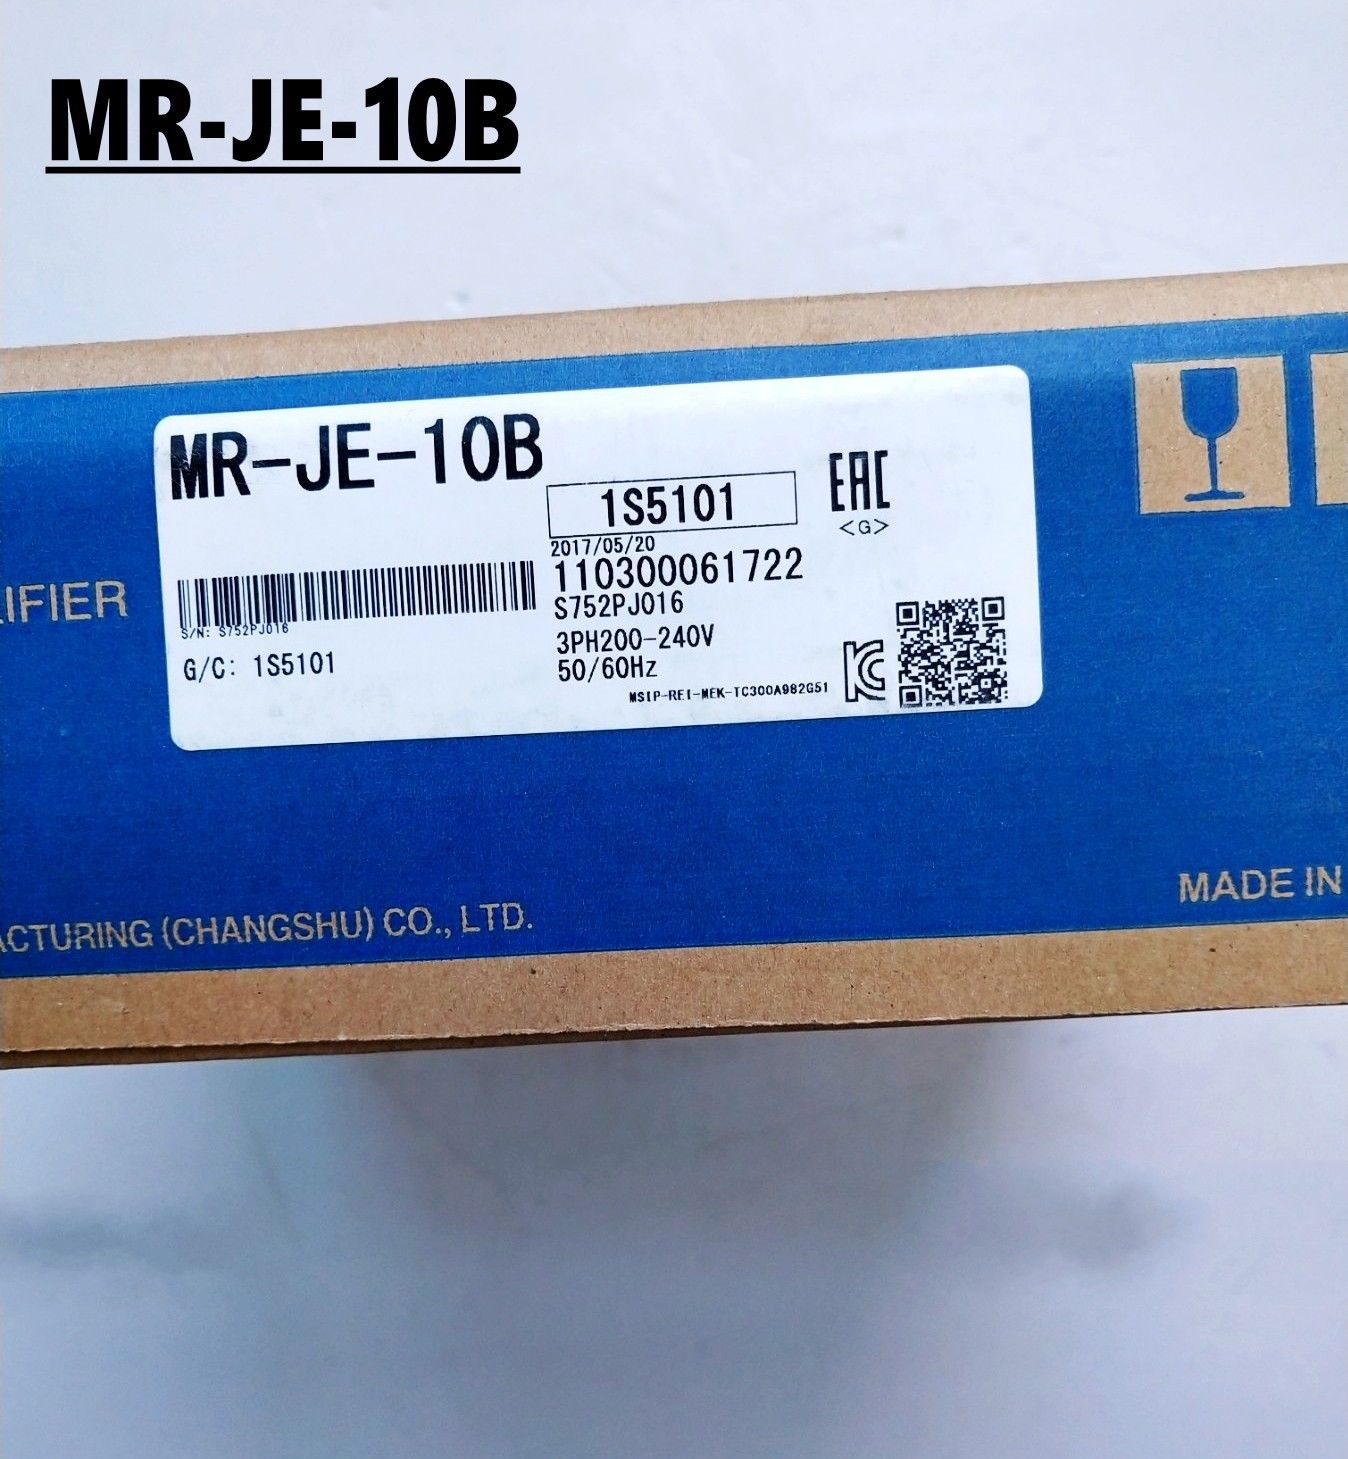 New Mitsubishi Servo Drive MR-JE-10B In Box MRJE10B - Click Image to Close